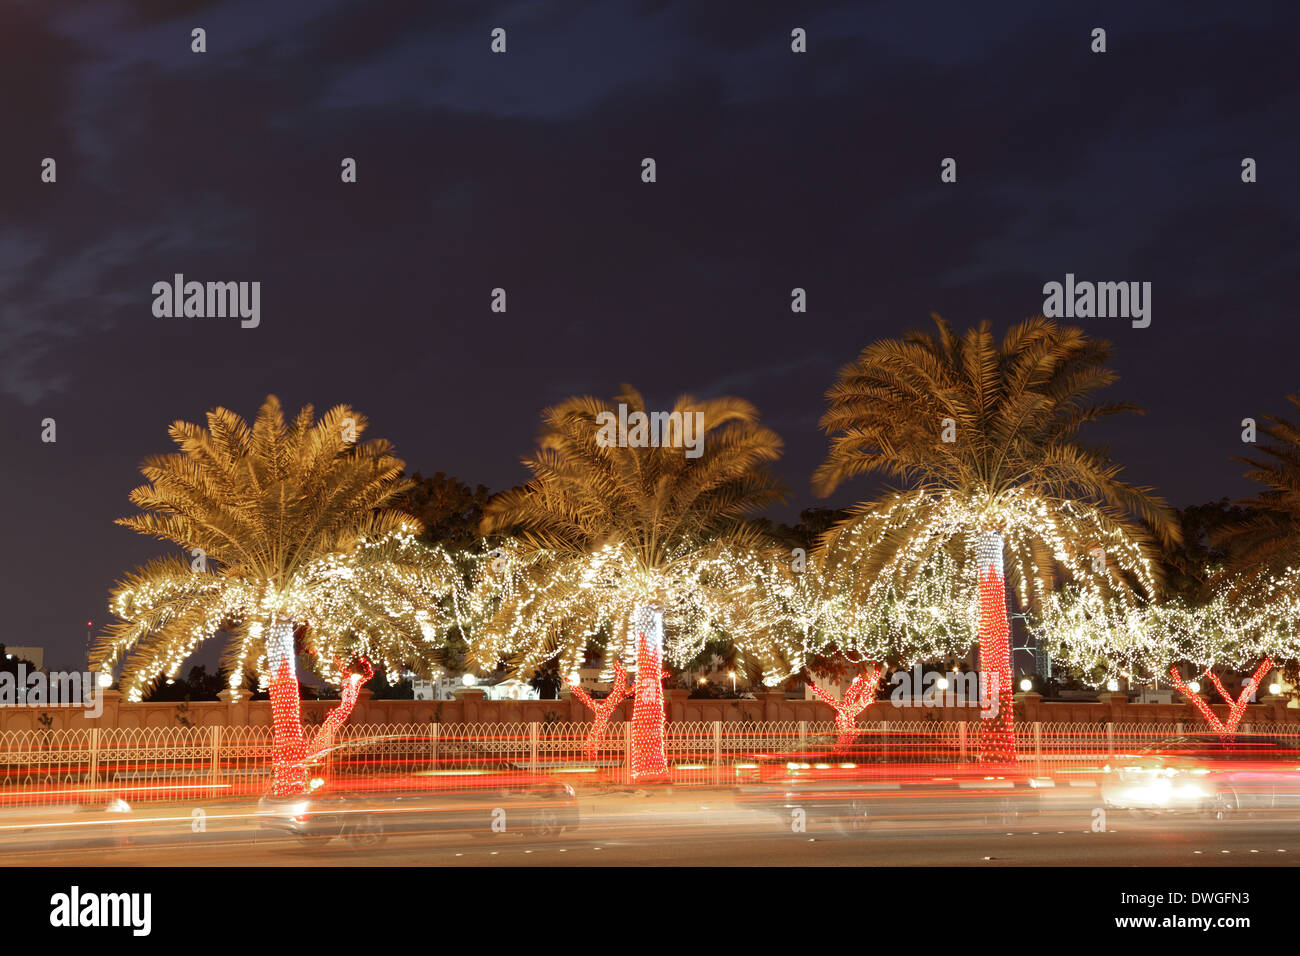 Illuminated palm trees in the city of Manama, Bahrain, Middle East Stock Photo